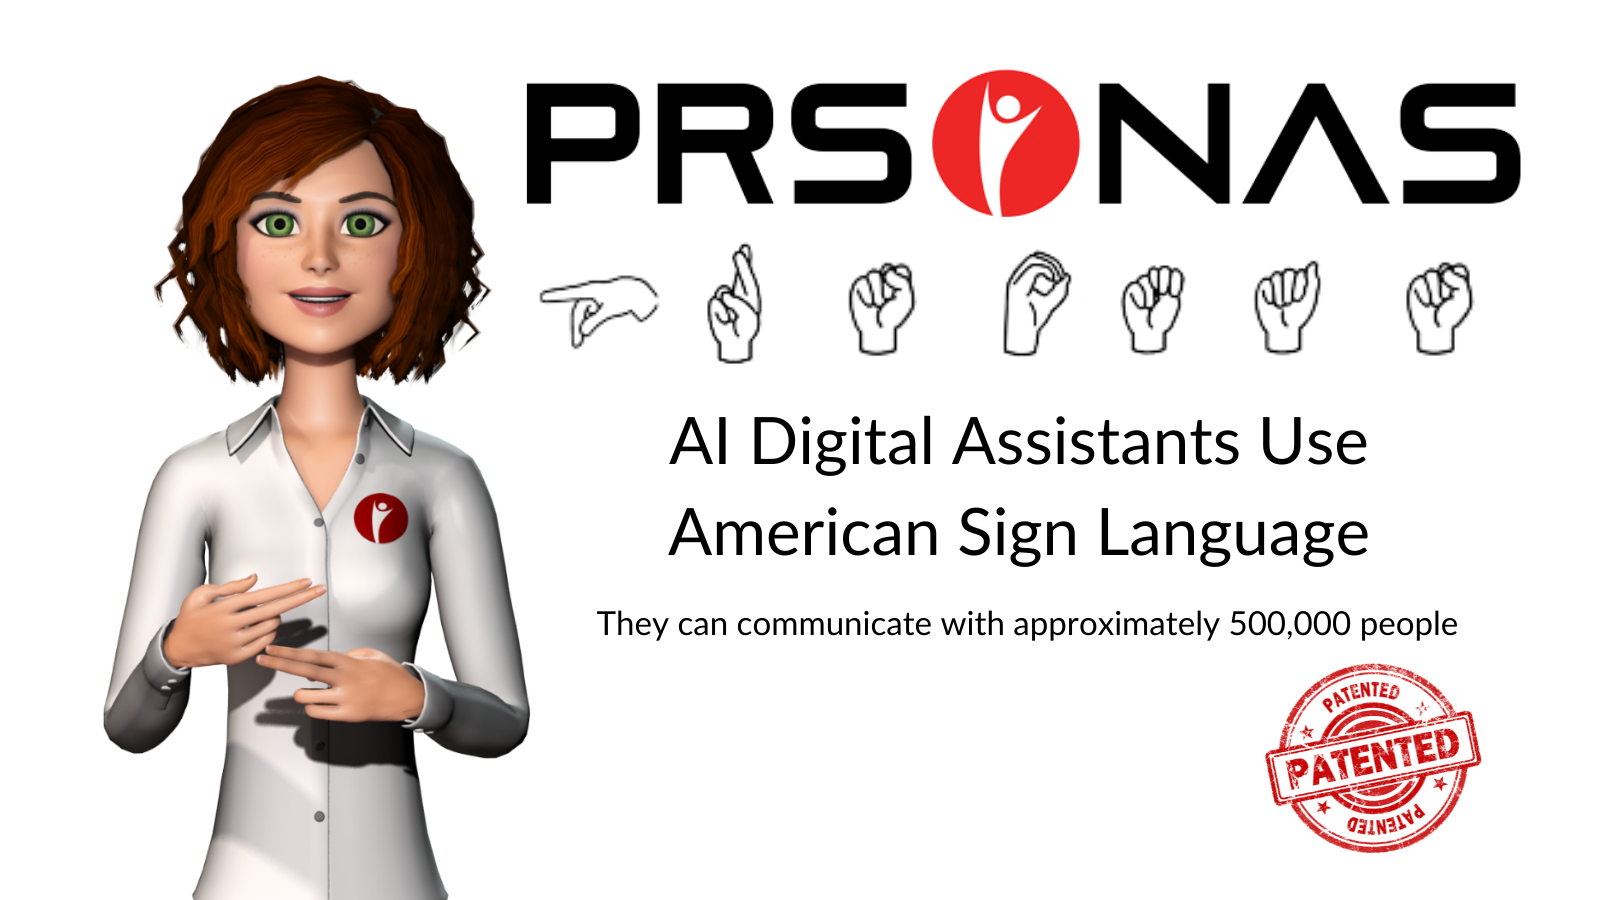 PRSONAS uses patented ASL technology